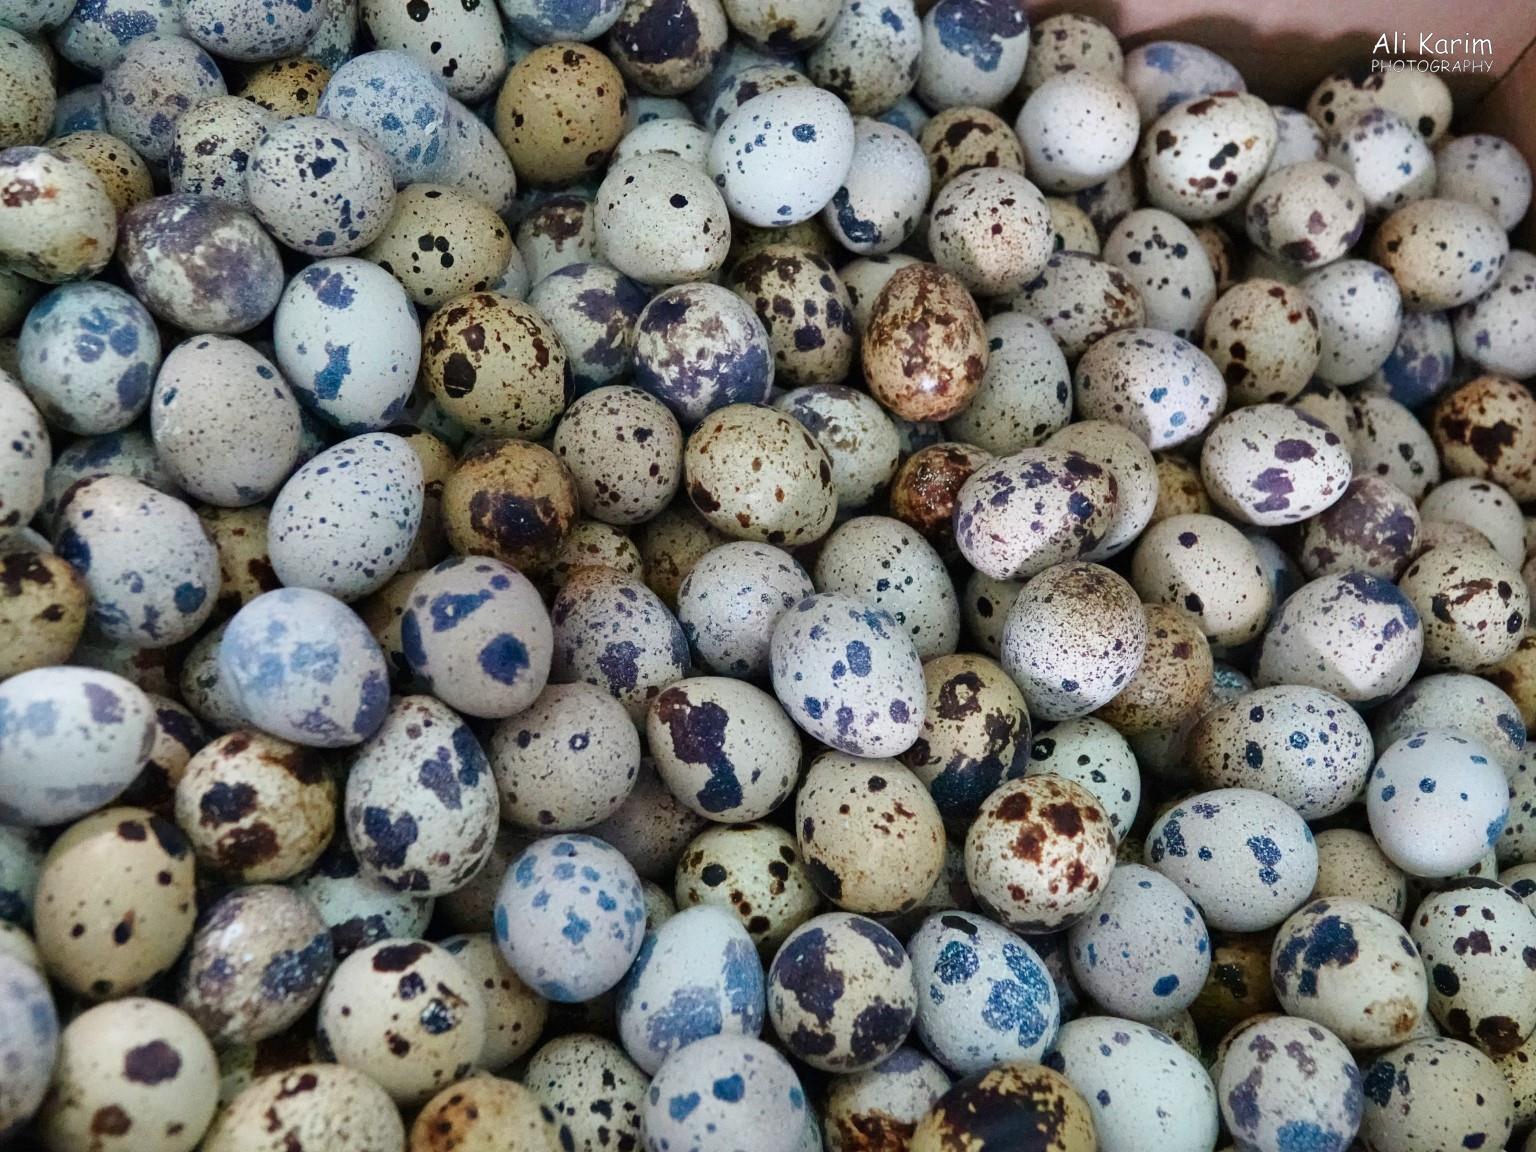 More Dushanbe, Tajikistan Quail eggs